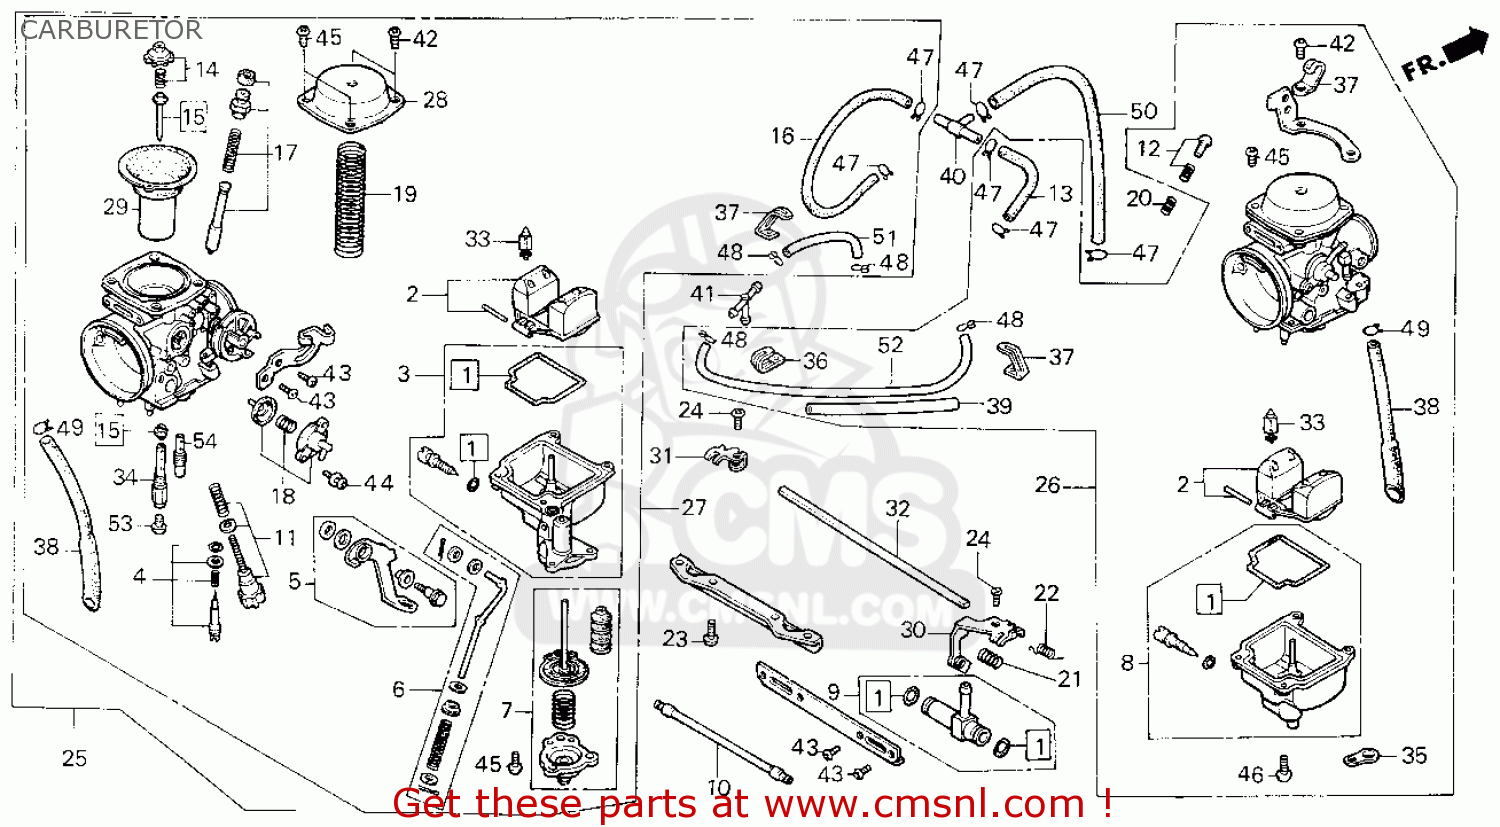 Honda rebel carburetor schematic #3